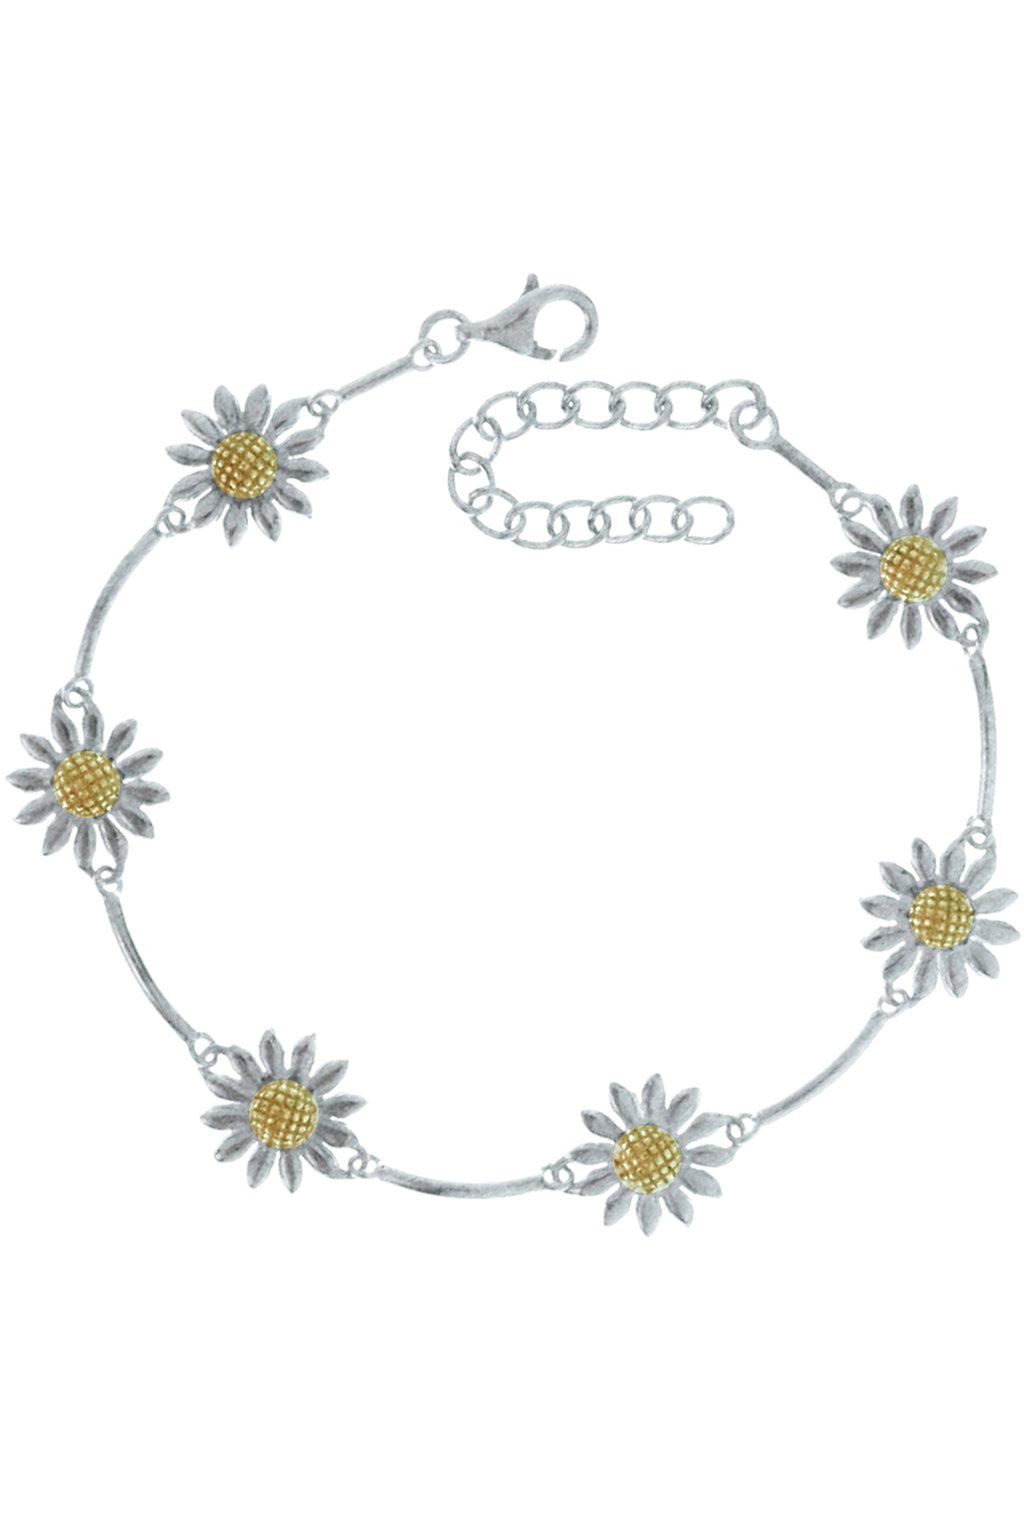 Polished Daisy Chain Silver Bracelet